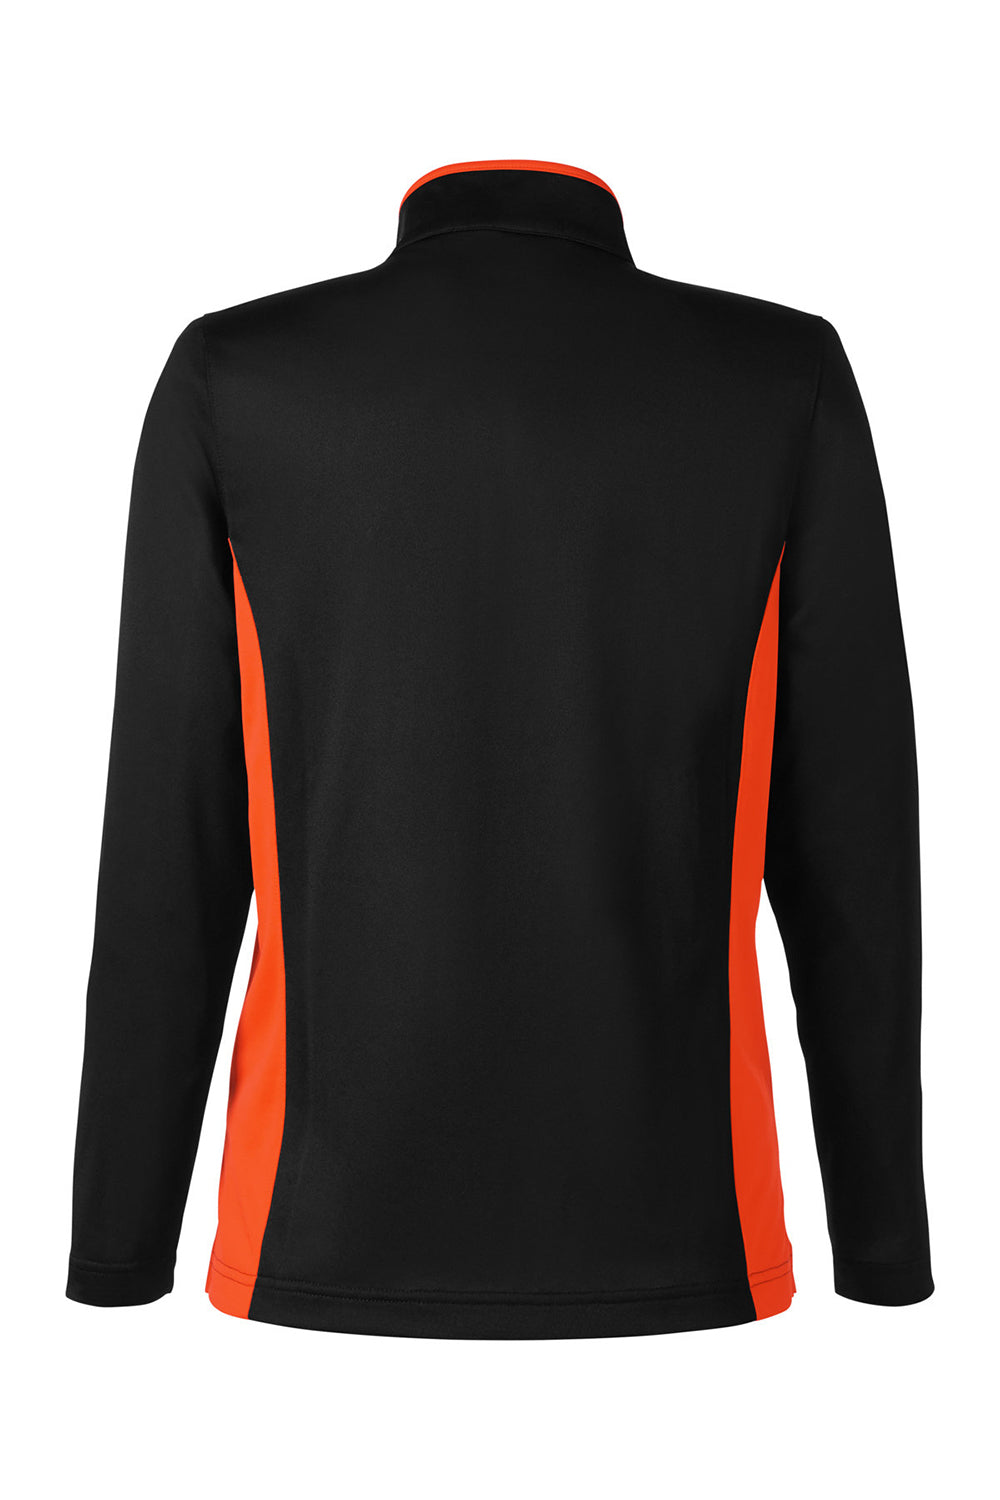 Harriton M786W Womens Flash Performance Moisture Wicking Colorblock 1/4 Zip Sweatshirt Black/Team Orange Flat Back